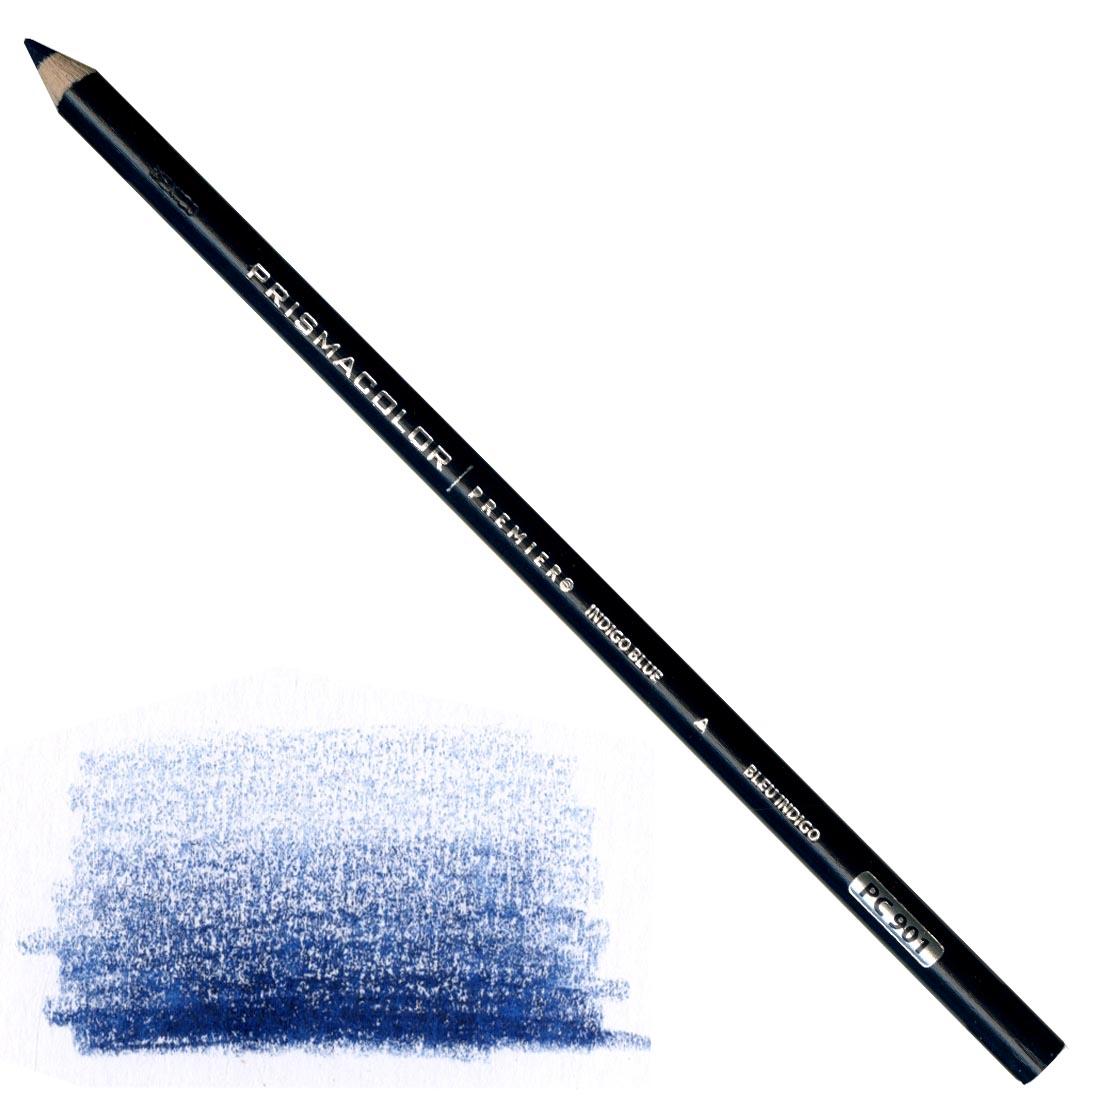 Indigo Blue Prismacolor Premier Colored Pencil with a sample colored swatch